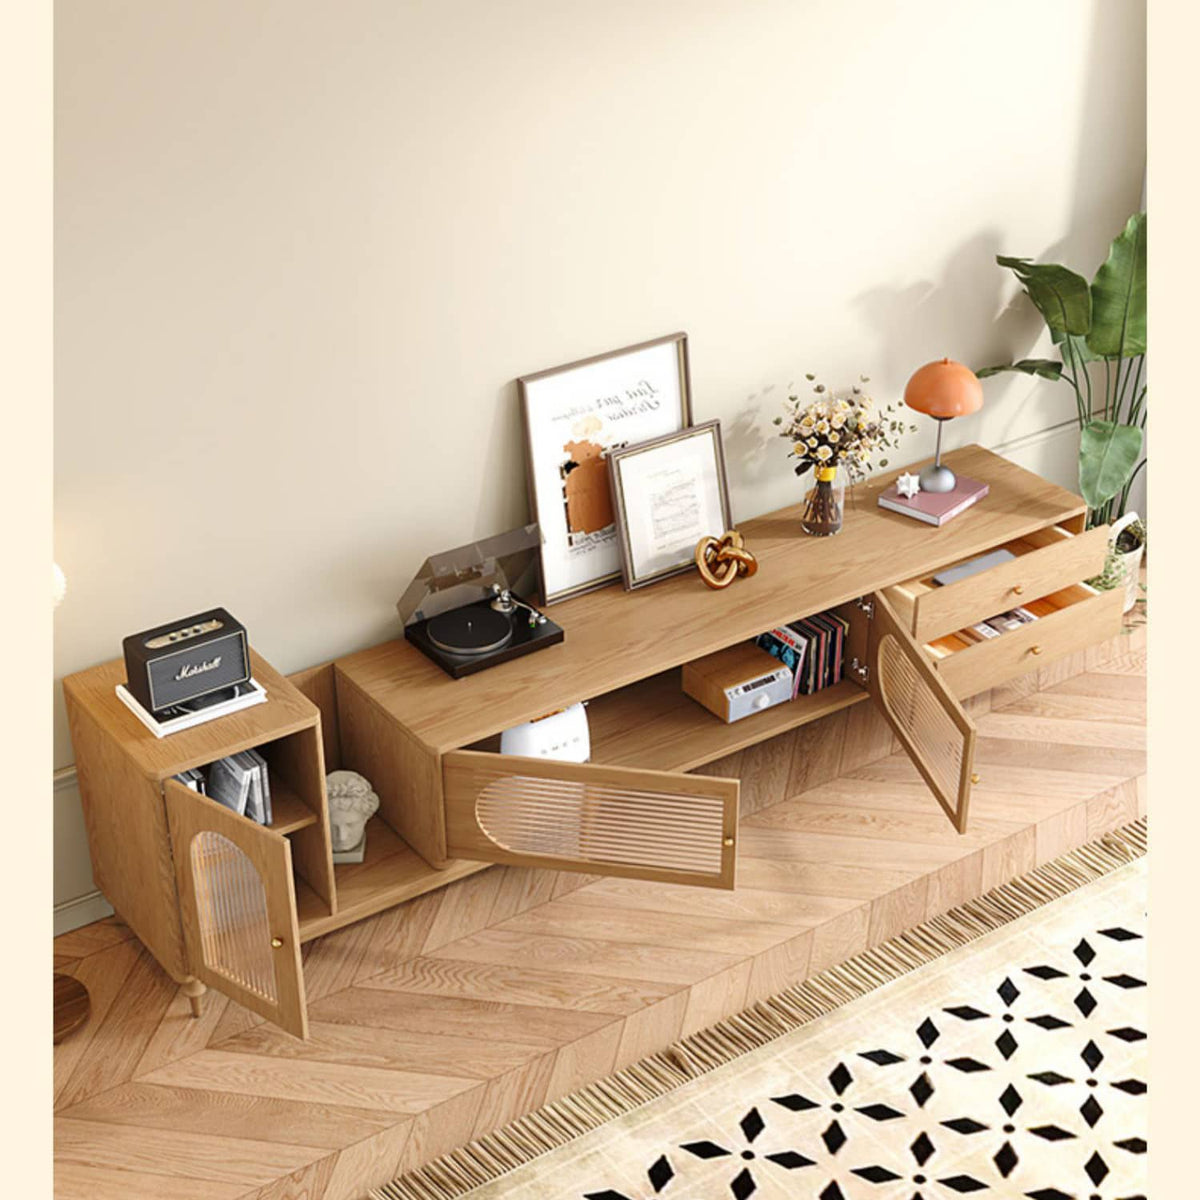 Natural Oak & Pine Tea Table - Elegant Wood Finish for Cozy Spaces hbzwg-644